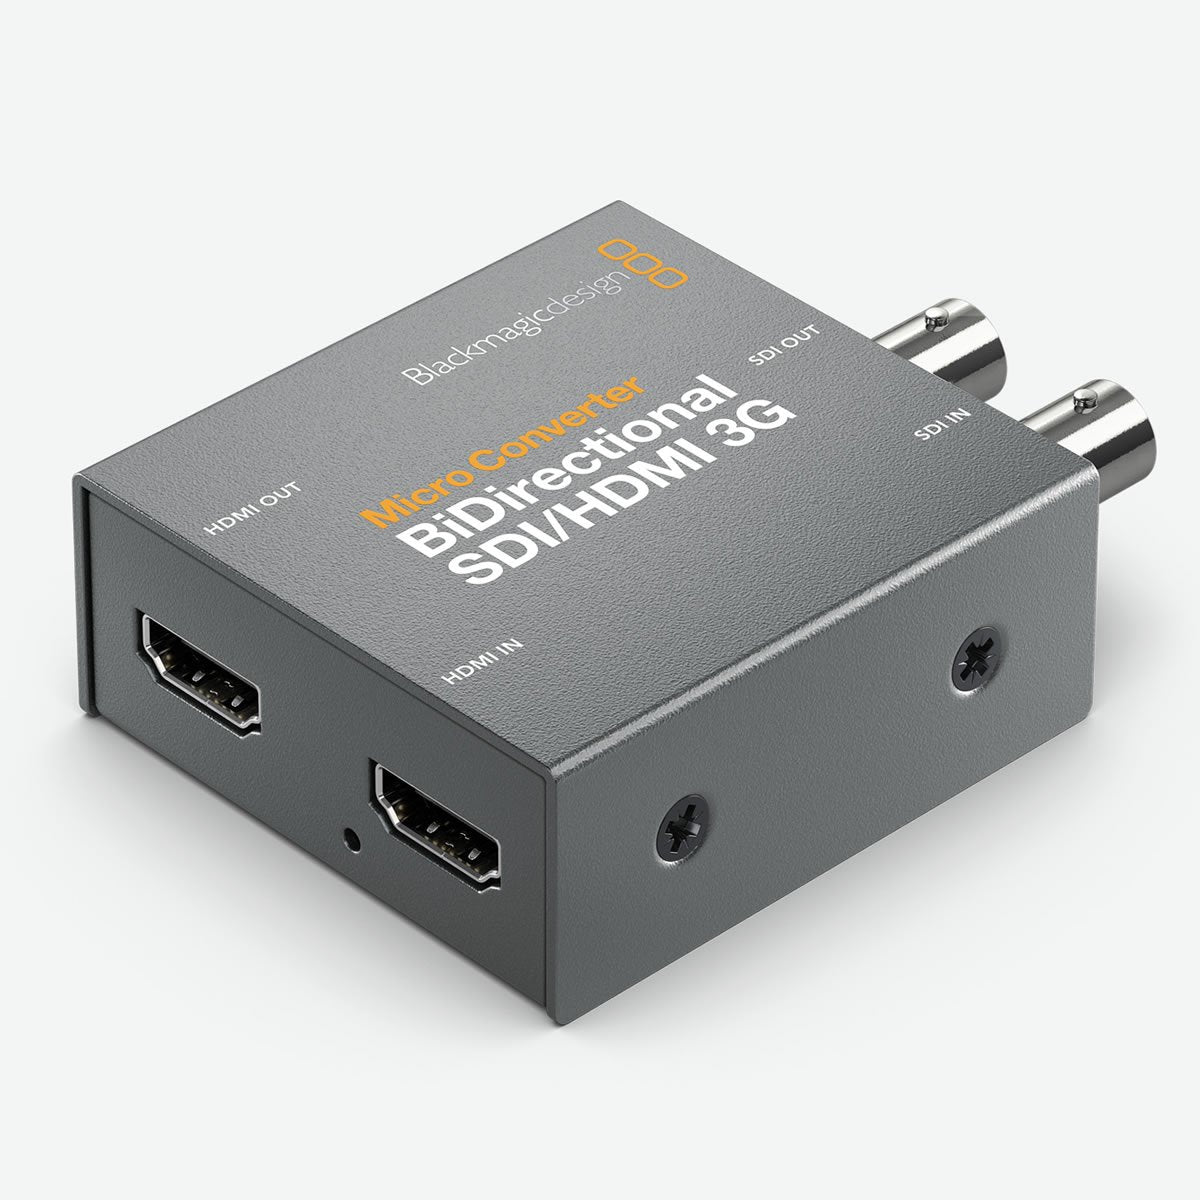 Blackmagicdesign(ブラックマジックデザイン) コンバーター Micro Converter BiDirectional SDI/HDMI 3G CONVBDC/SDI/HDMI03G